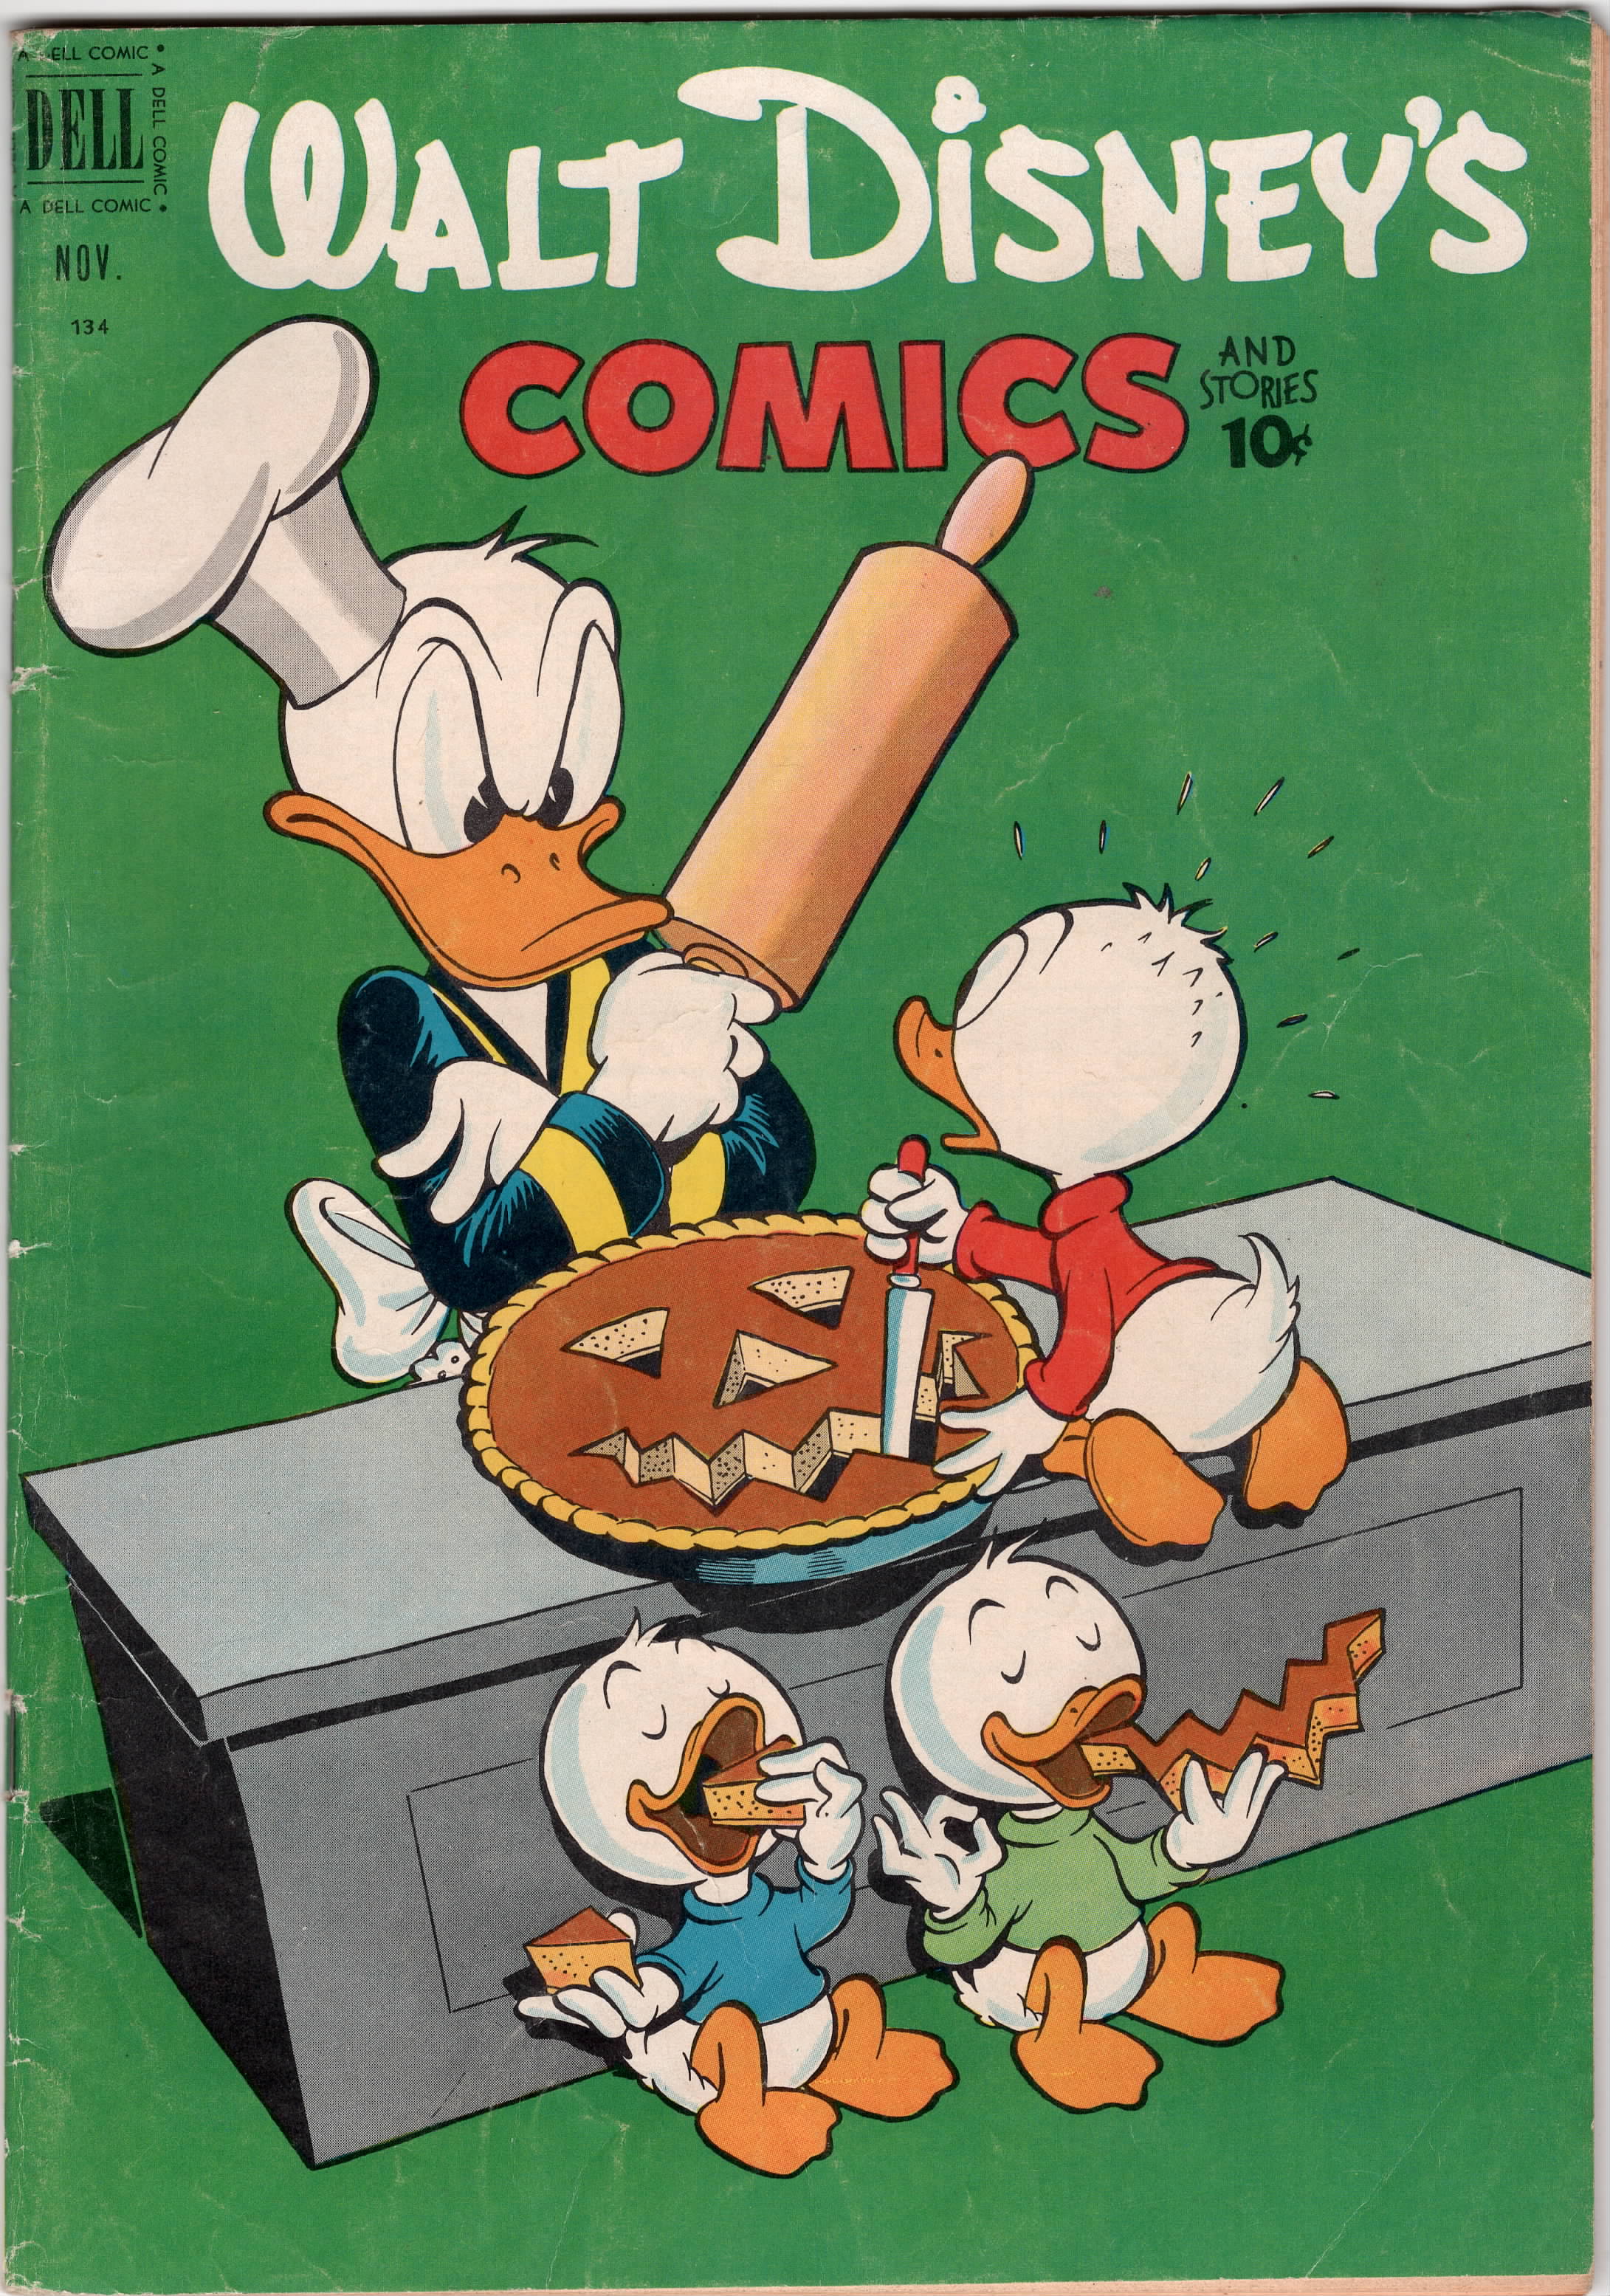 Walt Disney's Comics & Stories #134